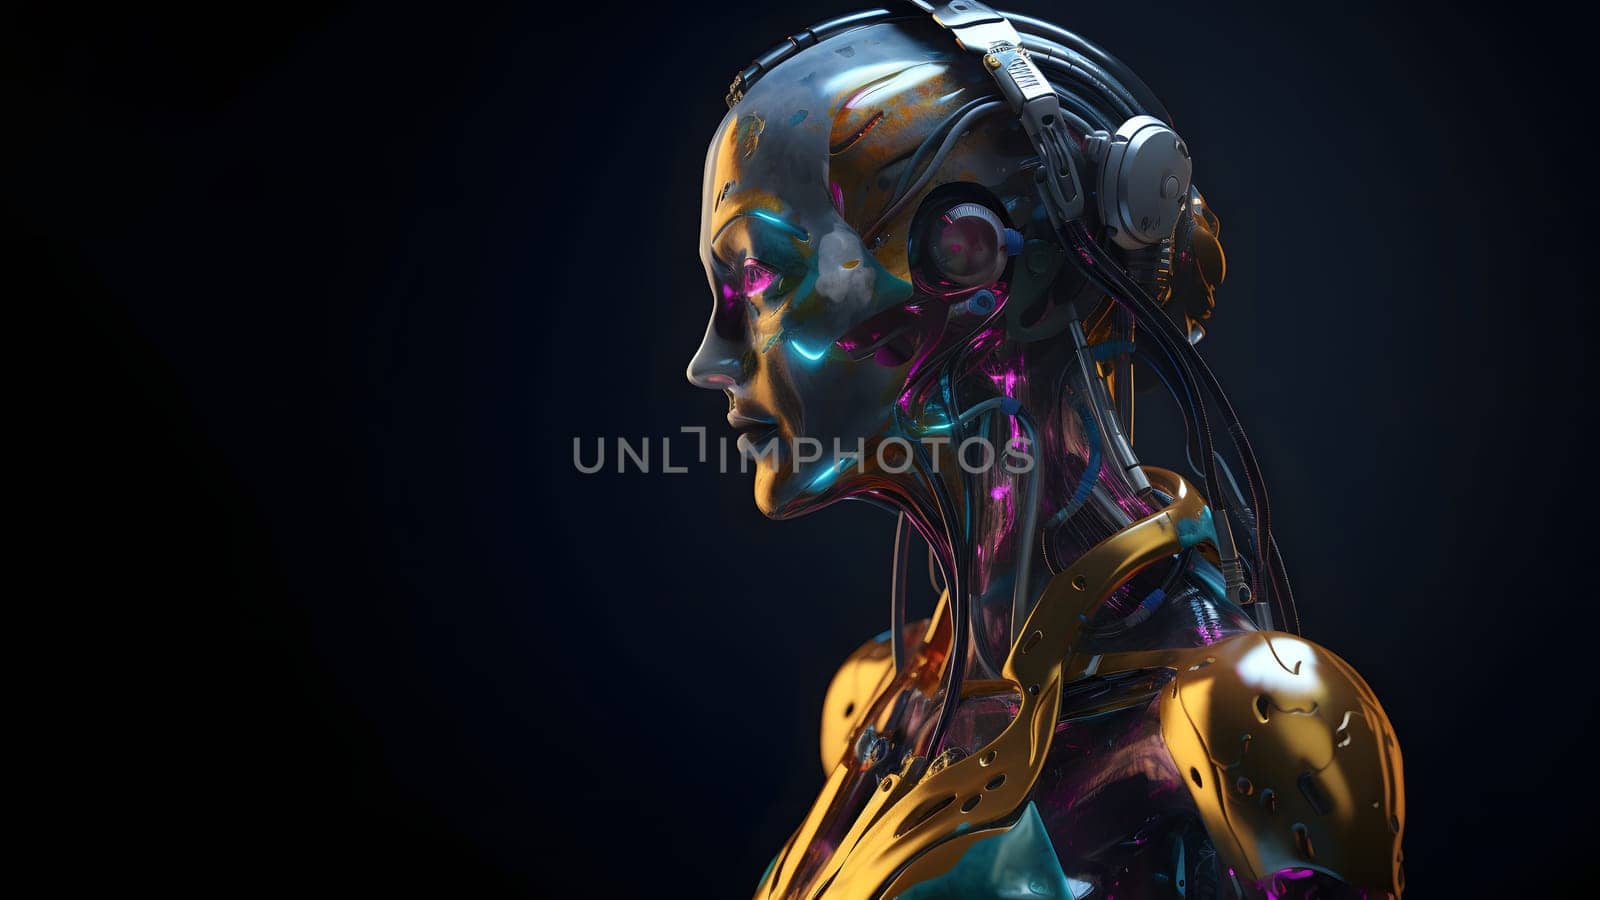 anthropomorphic humanoid female robot head portrait on dark background in blue tones, neural network generated art by z1b